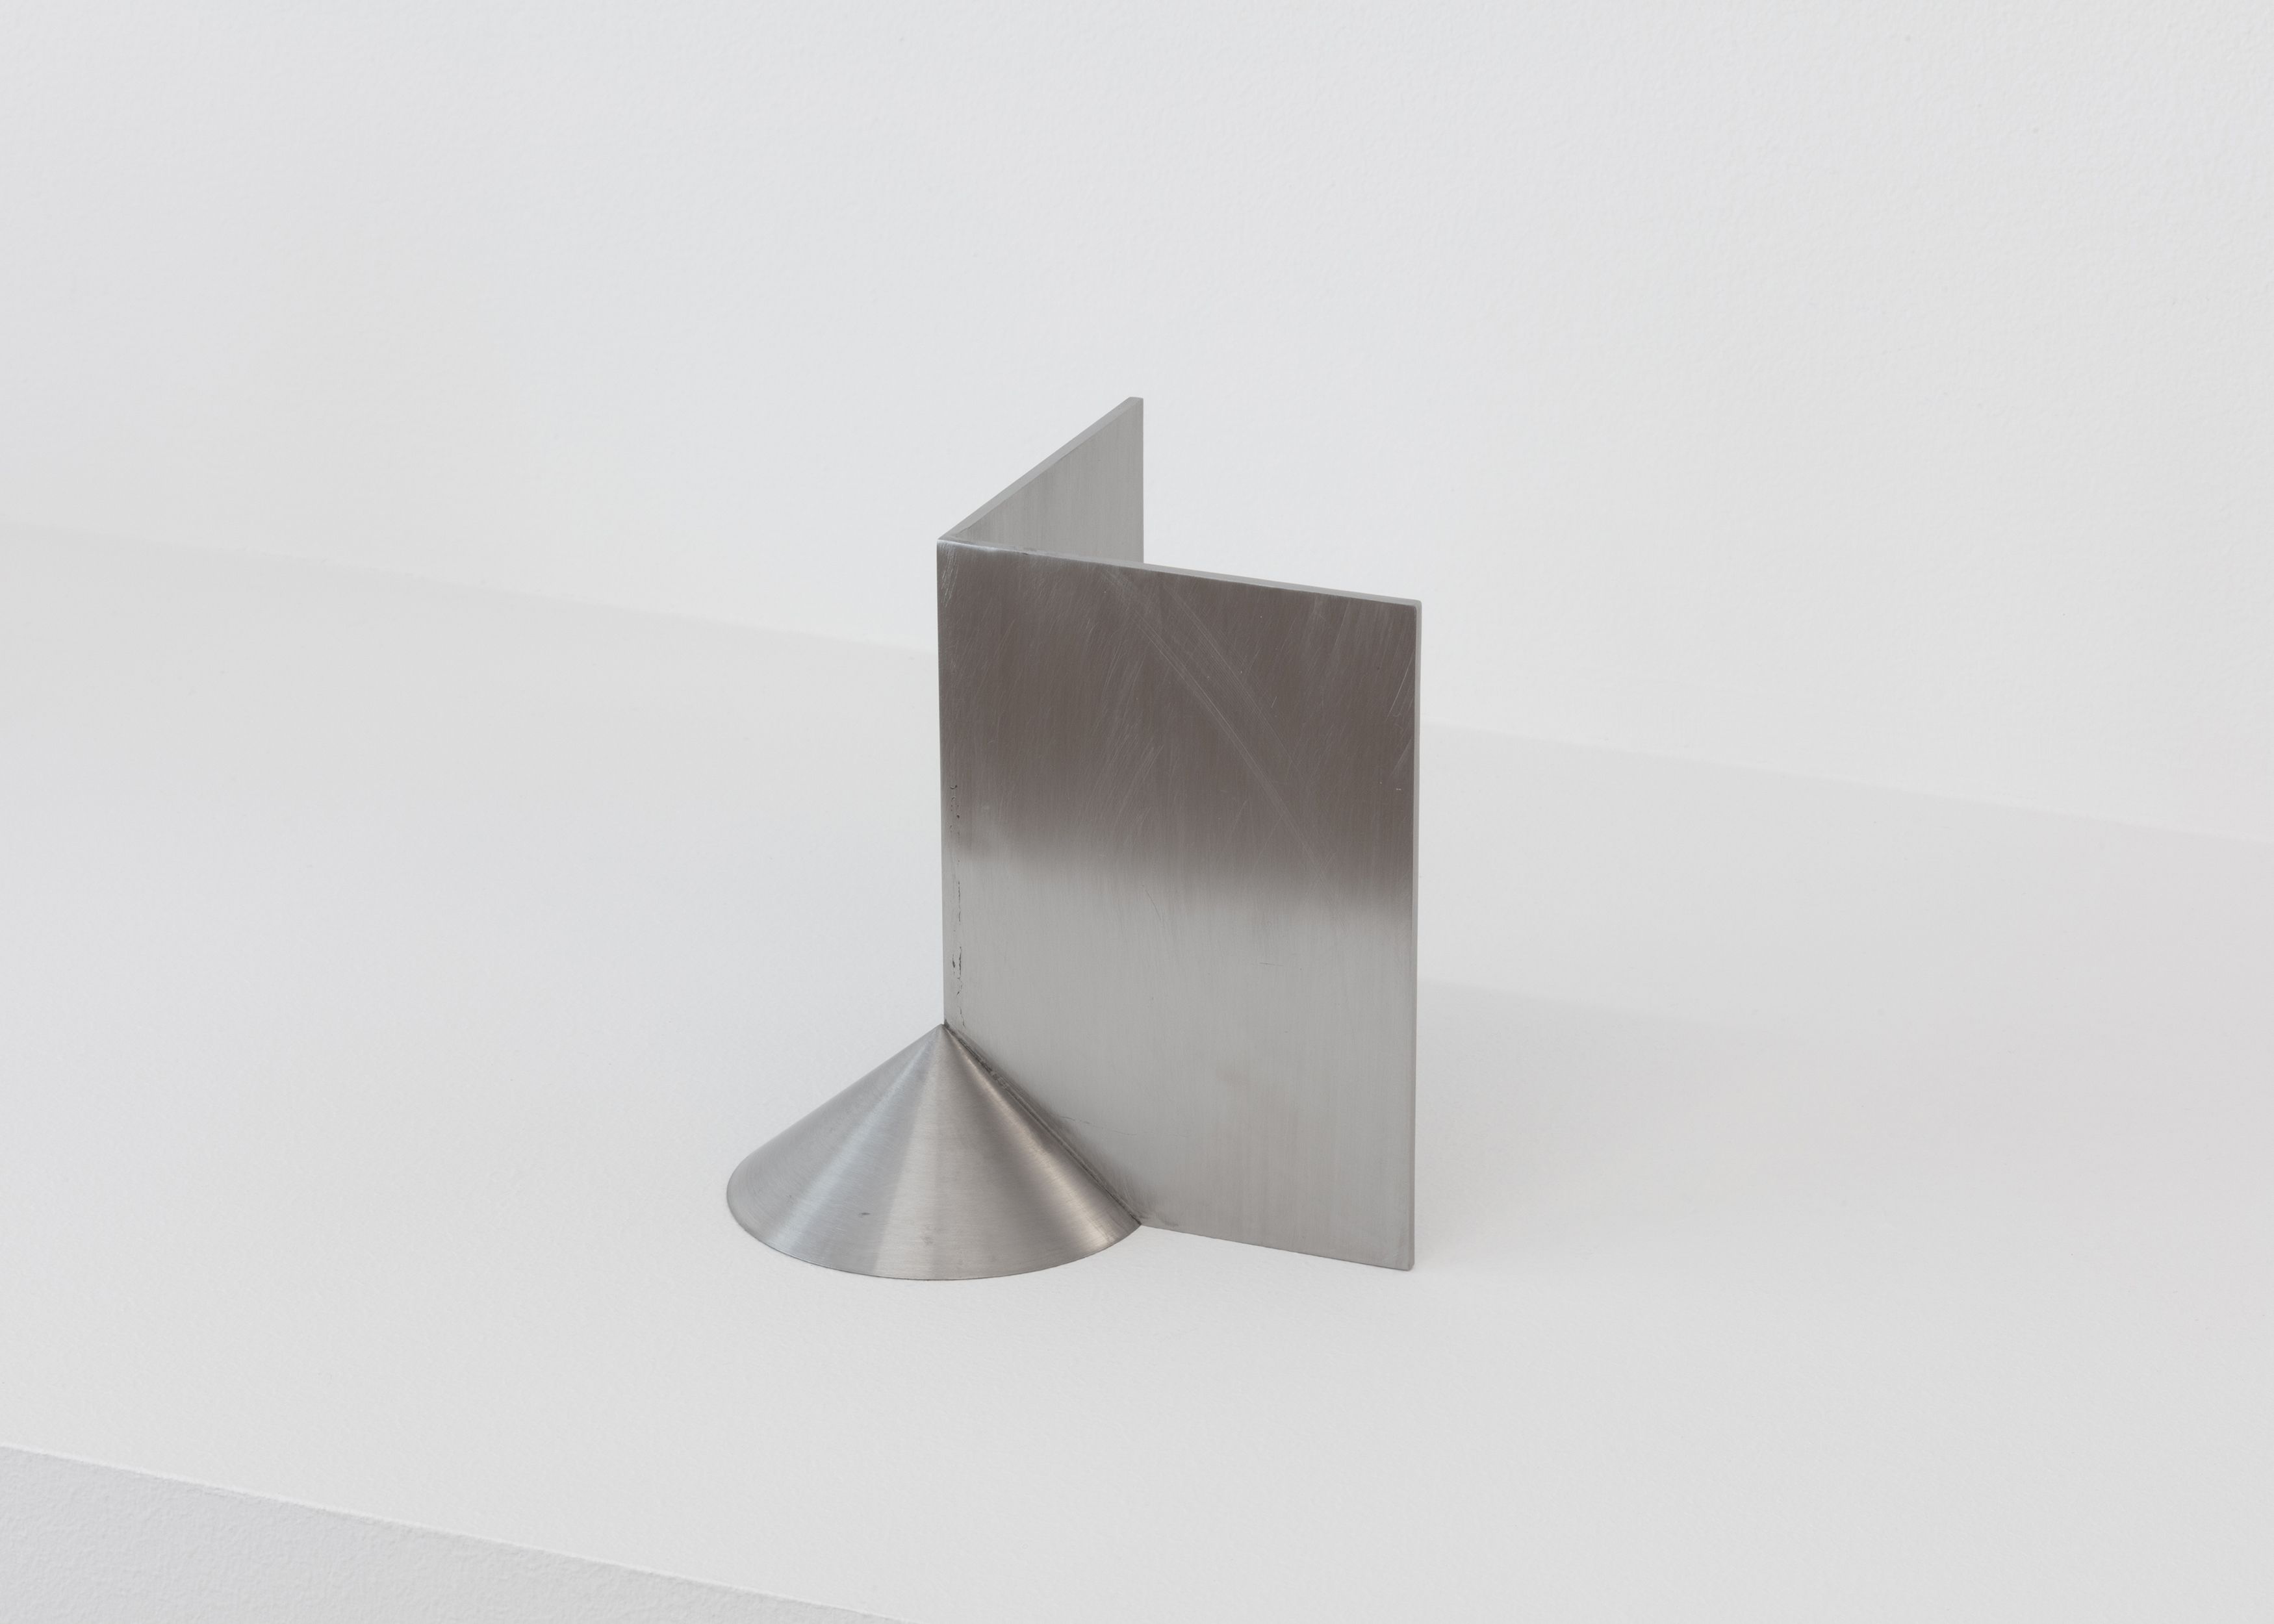 Stephen Lichty, Form 8, 2021, stainless steel, 4 x 4 x 3 in. (10.16 x 10.16 x 7.62 cm)